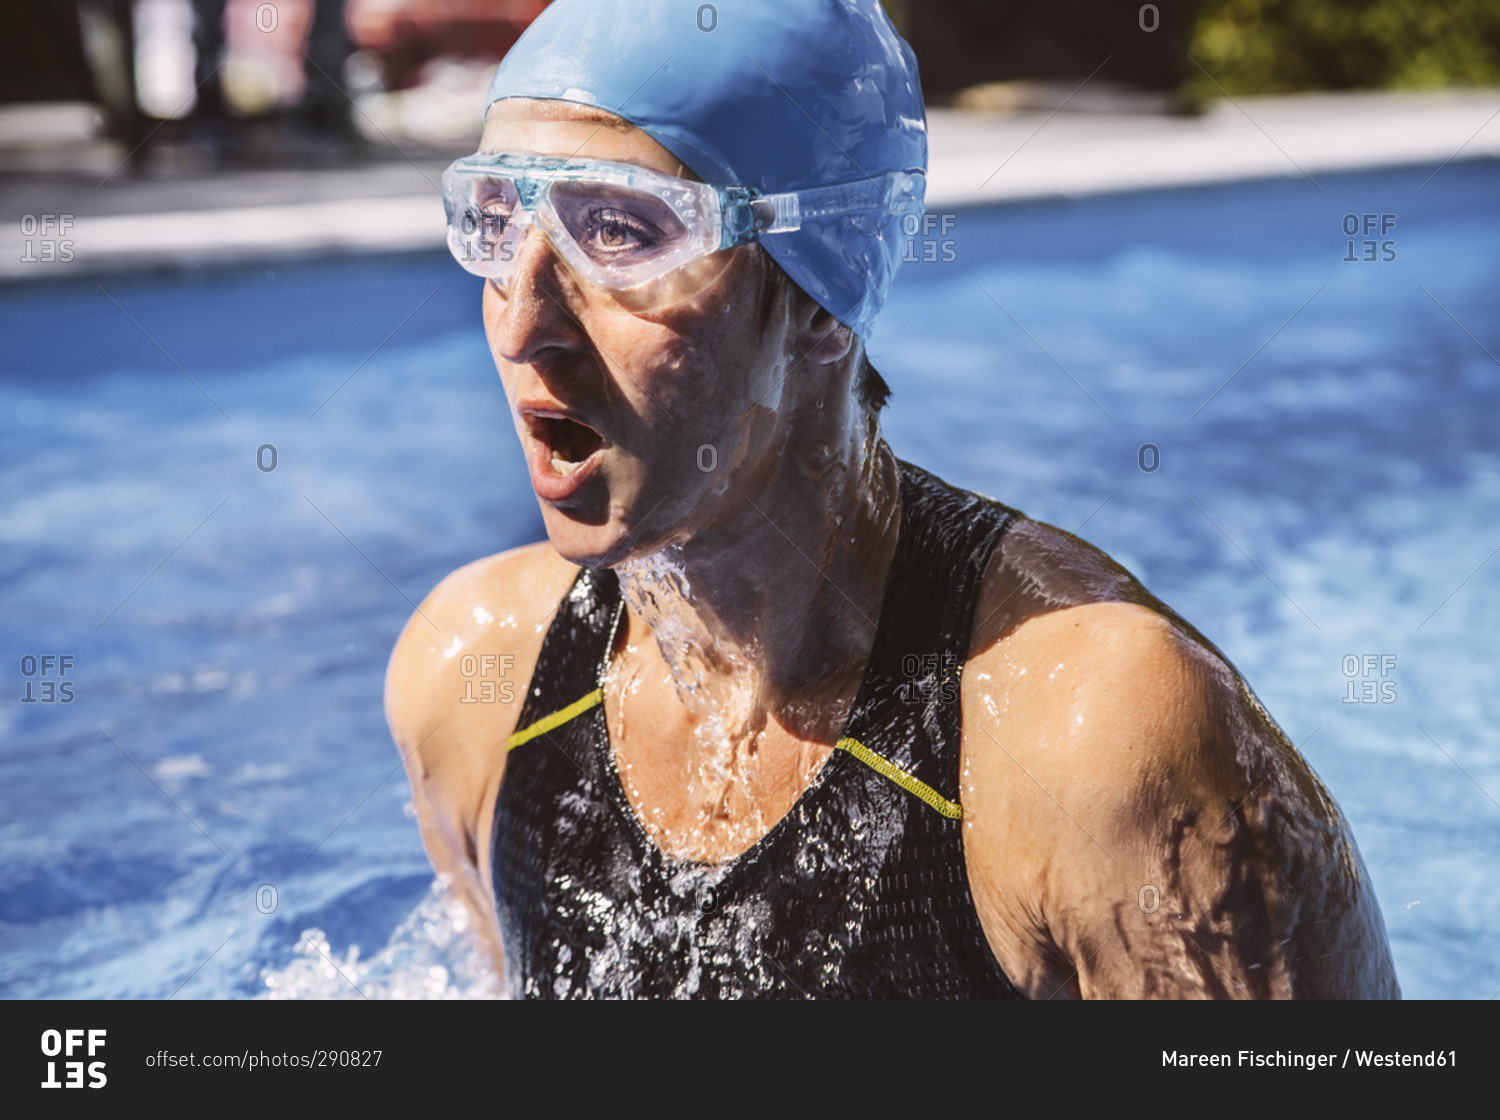 Female triathlete taking a deep breath while swimming